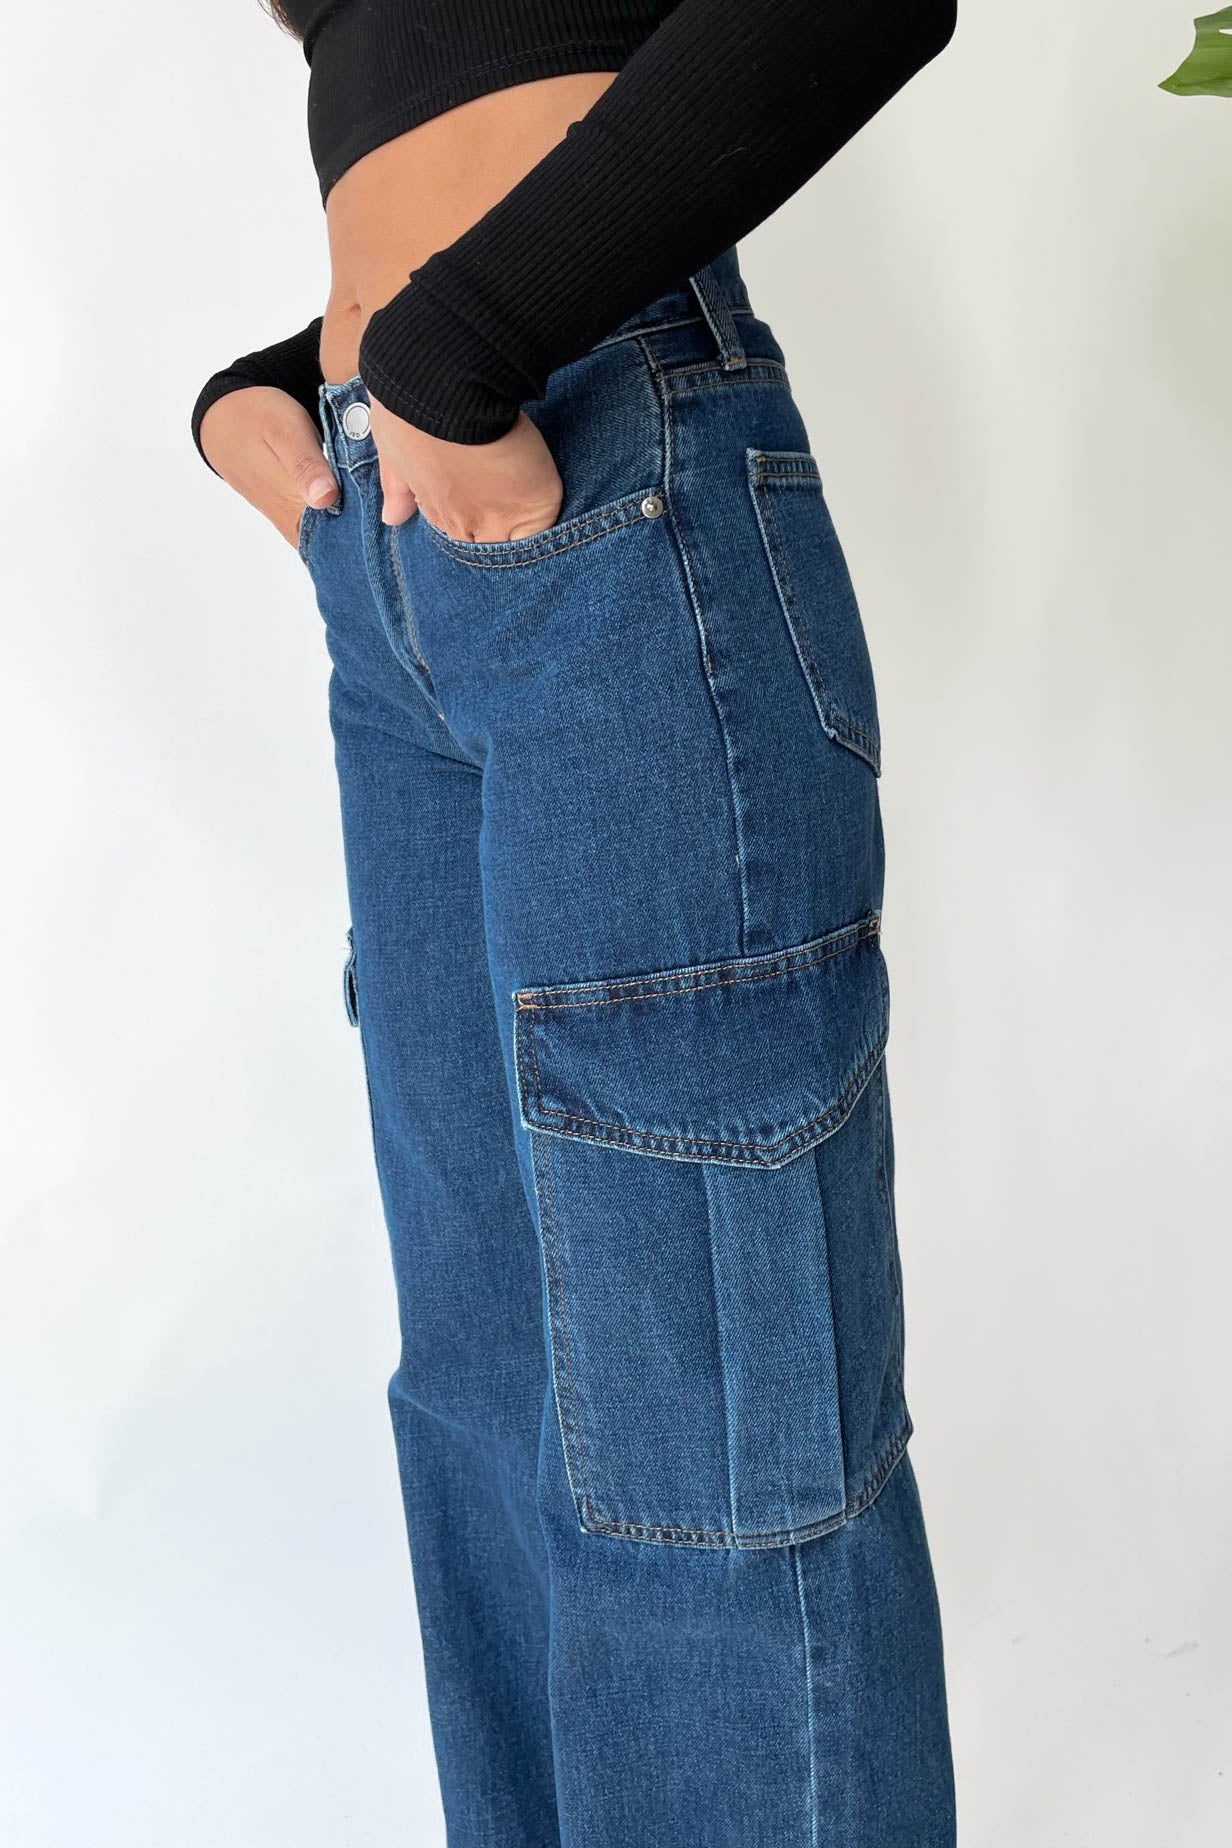 Finley Jeans in Dark Denim